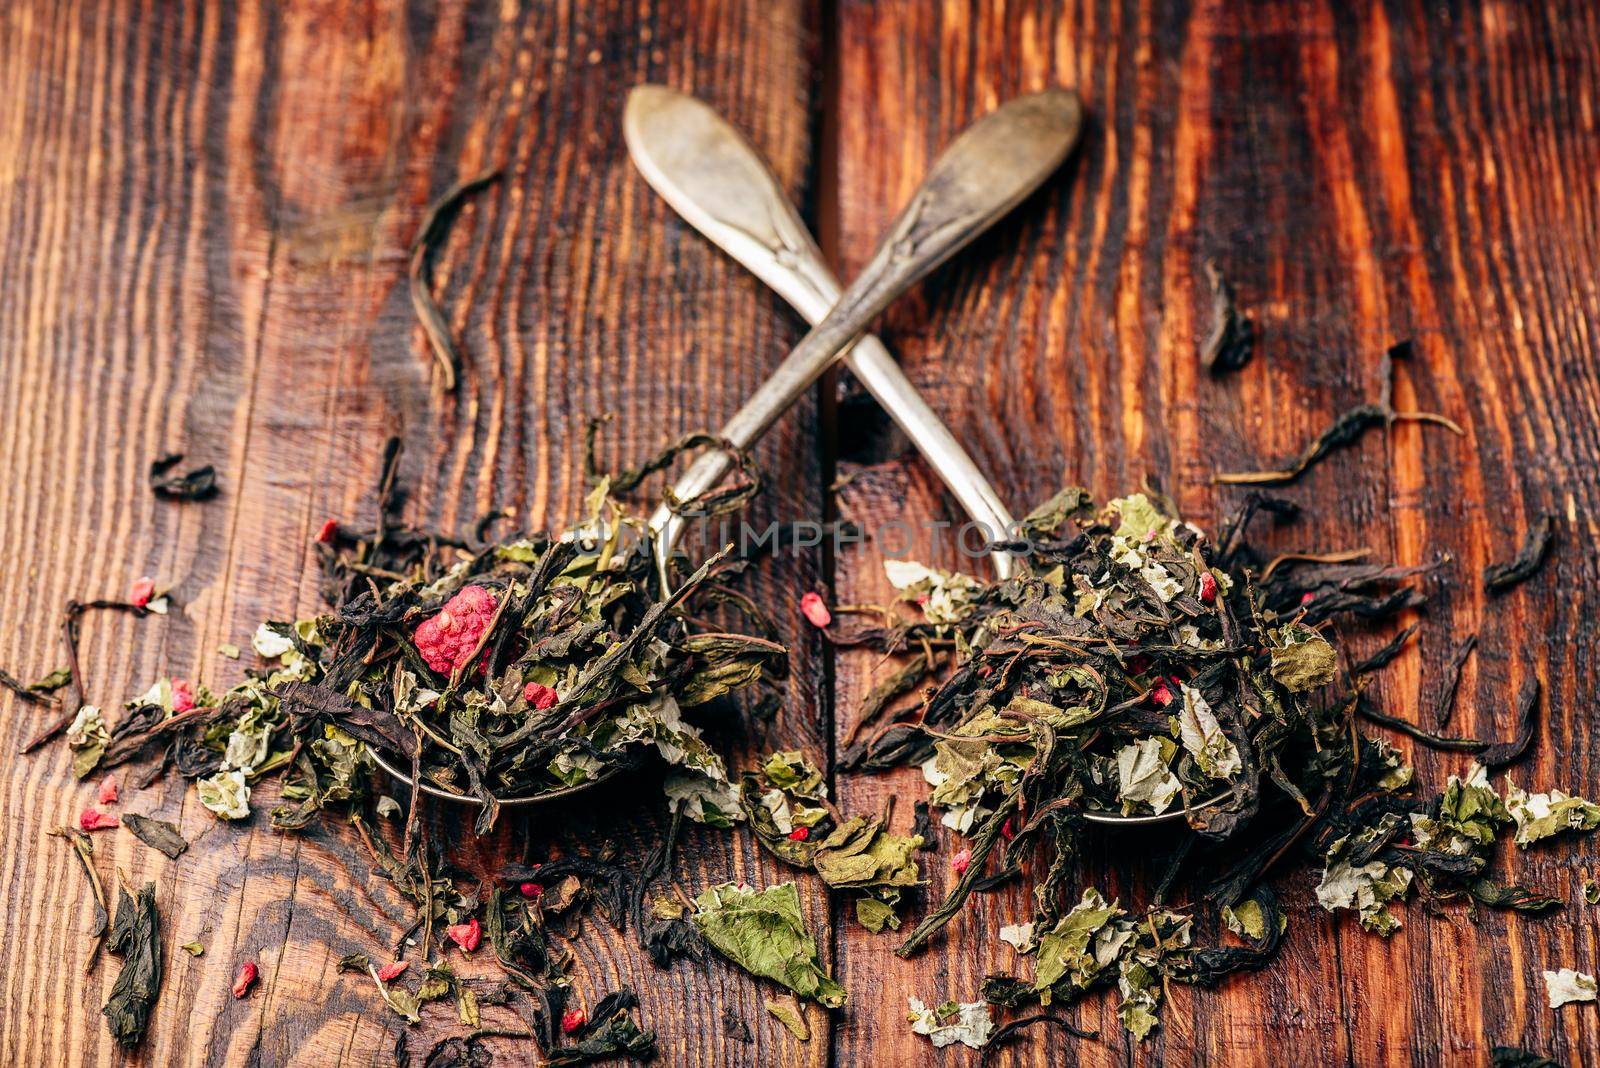 Two spoonfuls of raspberry herbal tea by Seva_blsv